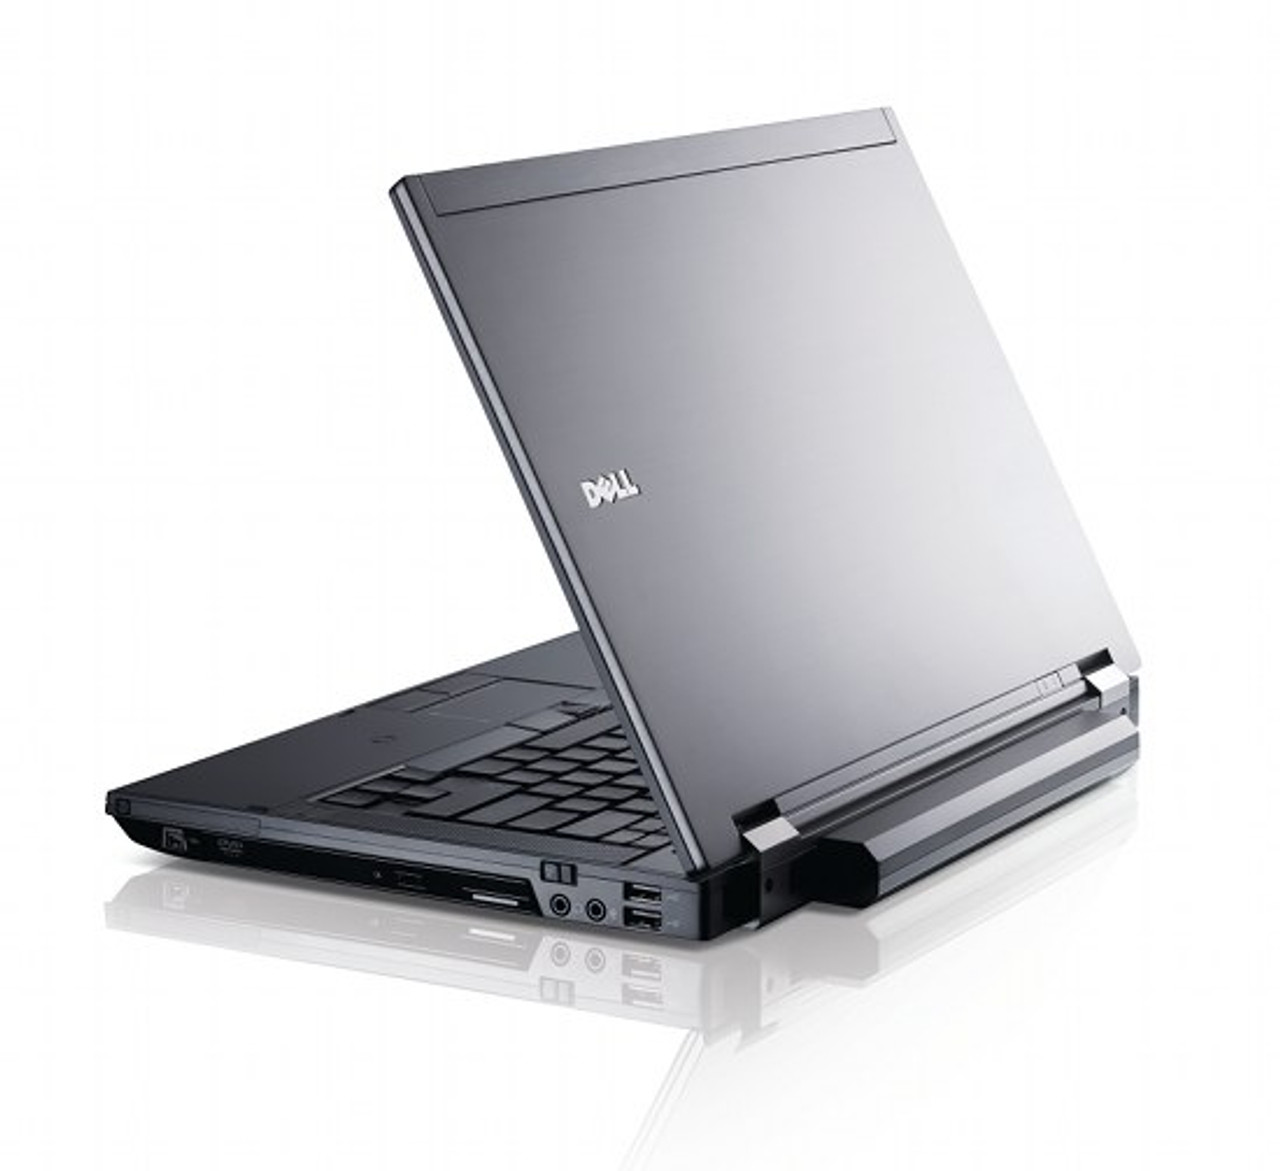 Dell Latitude E6410 Laptop Core i5 2.4GHz, 4GB Ram, 250GB HDD, DVD-RW, Windows 7 Pro 64 Notebook-1